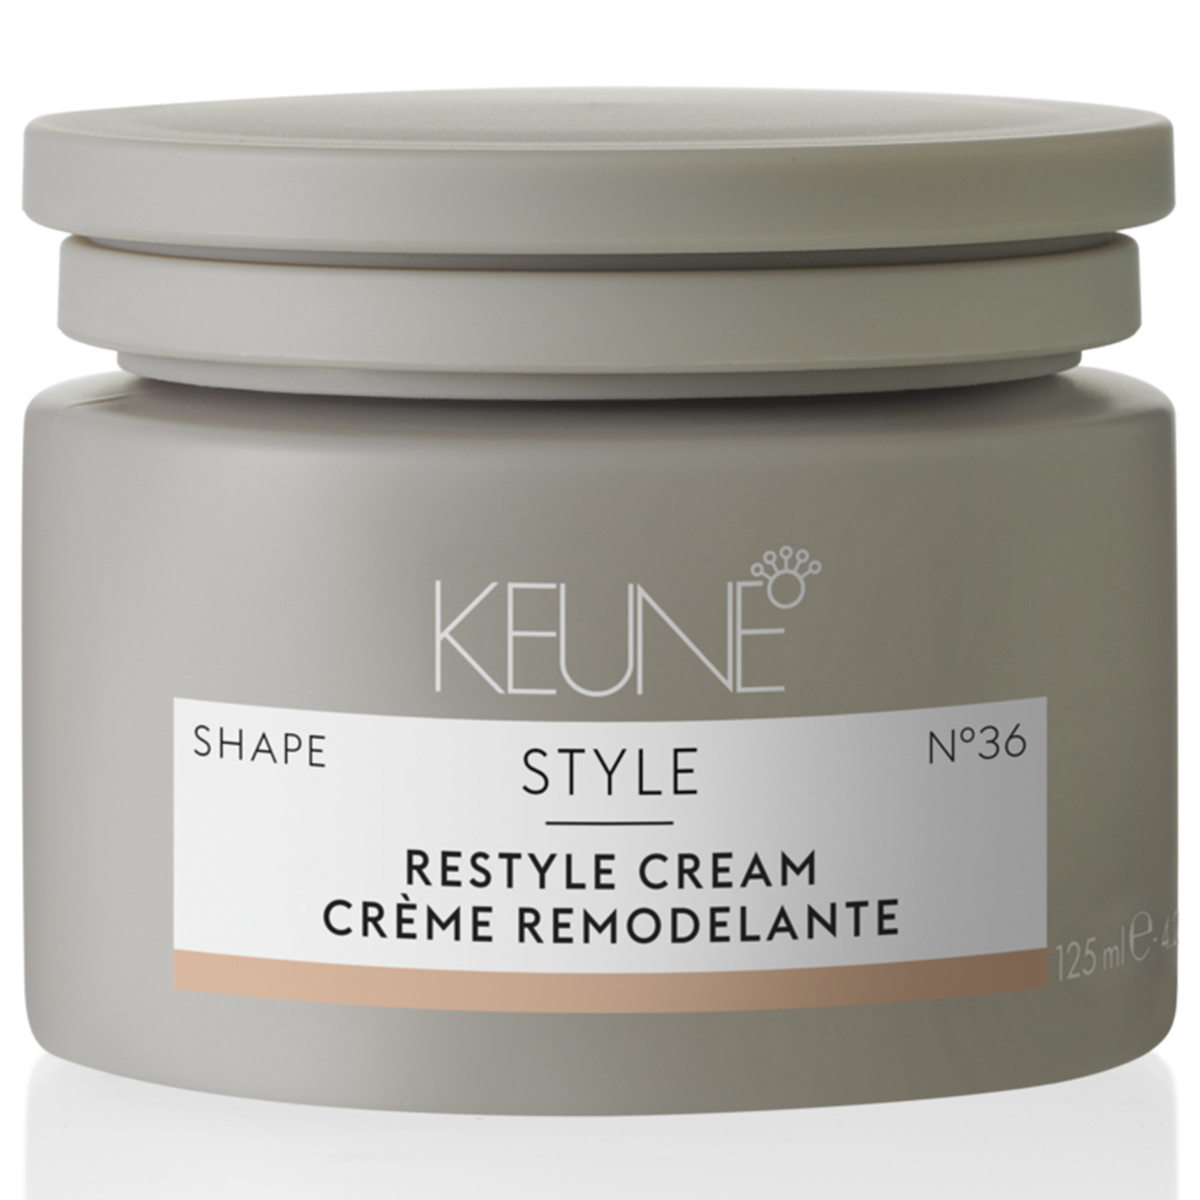 цена Keune Крем для рестайлинга Restyle Cream №36, 125 мл (Keune, Style)